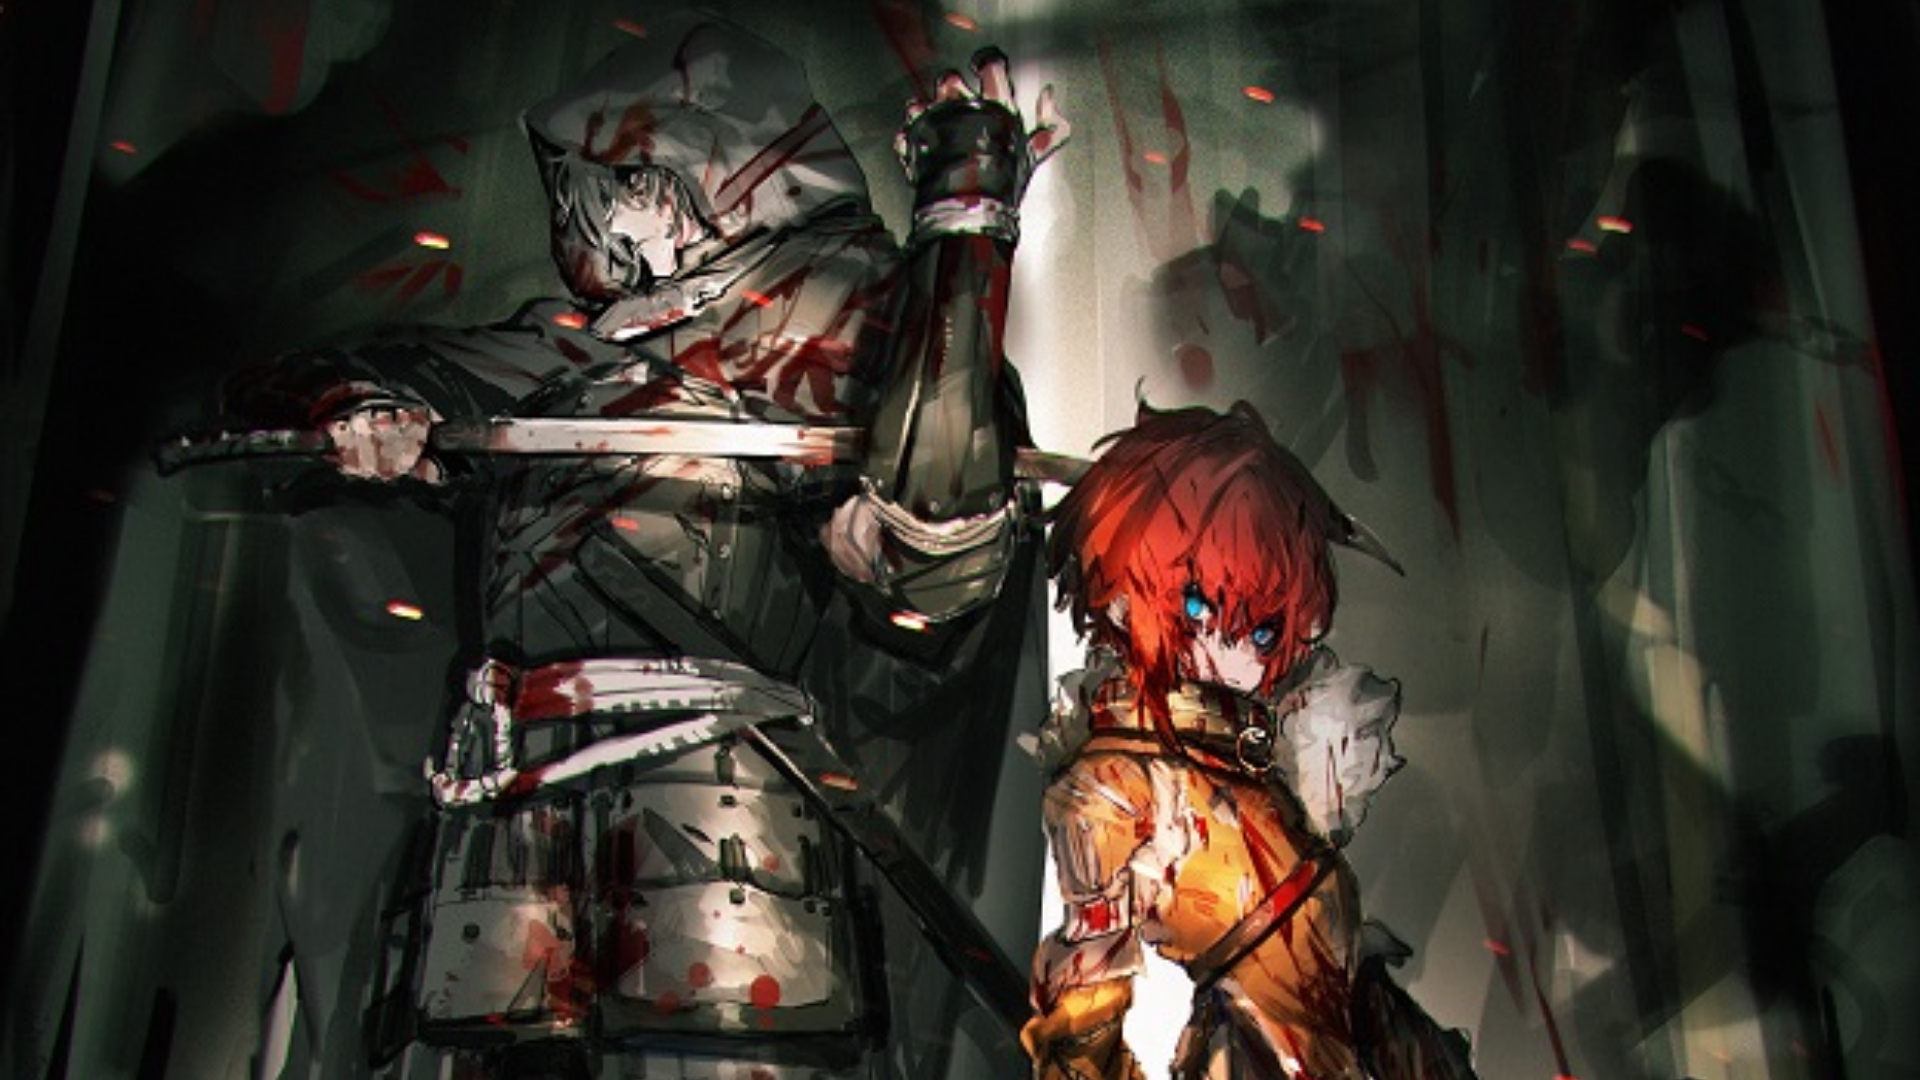 Goblin Slayer Author and Overlord Illustrator Dark Fantasy Novel